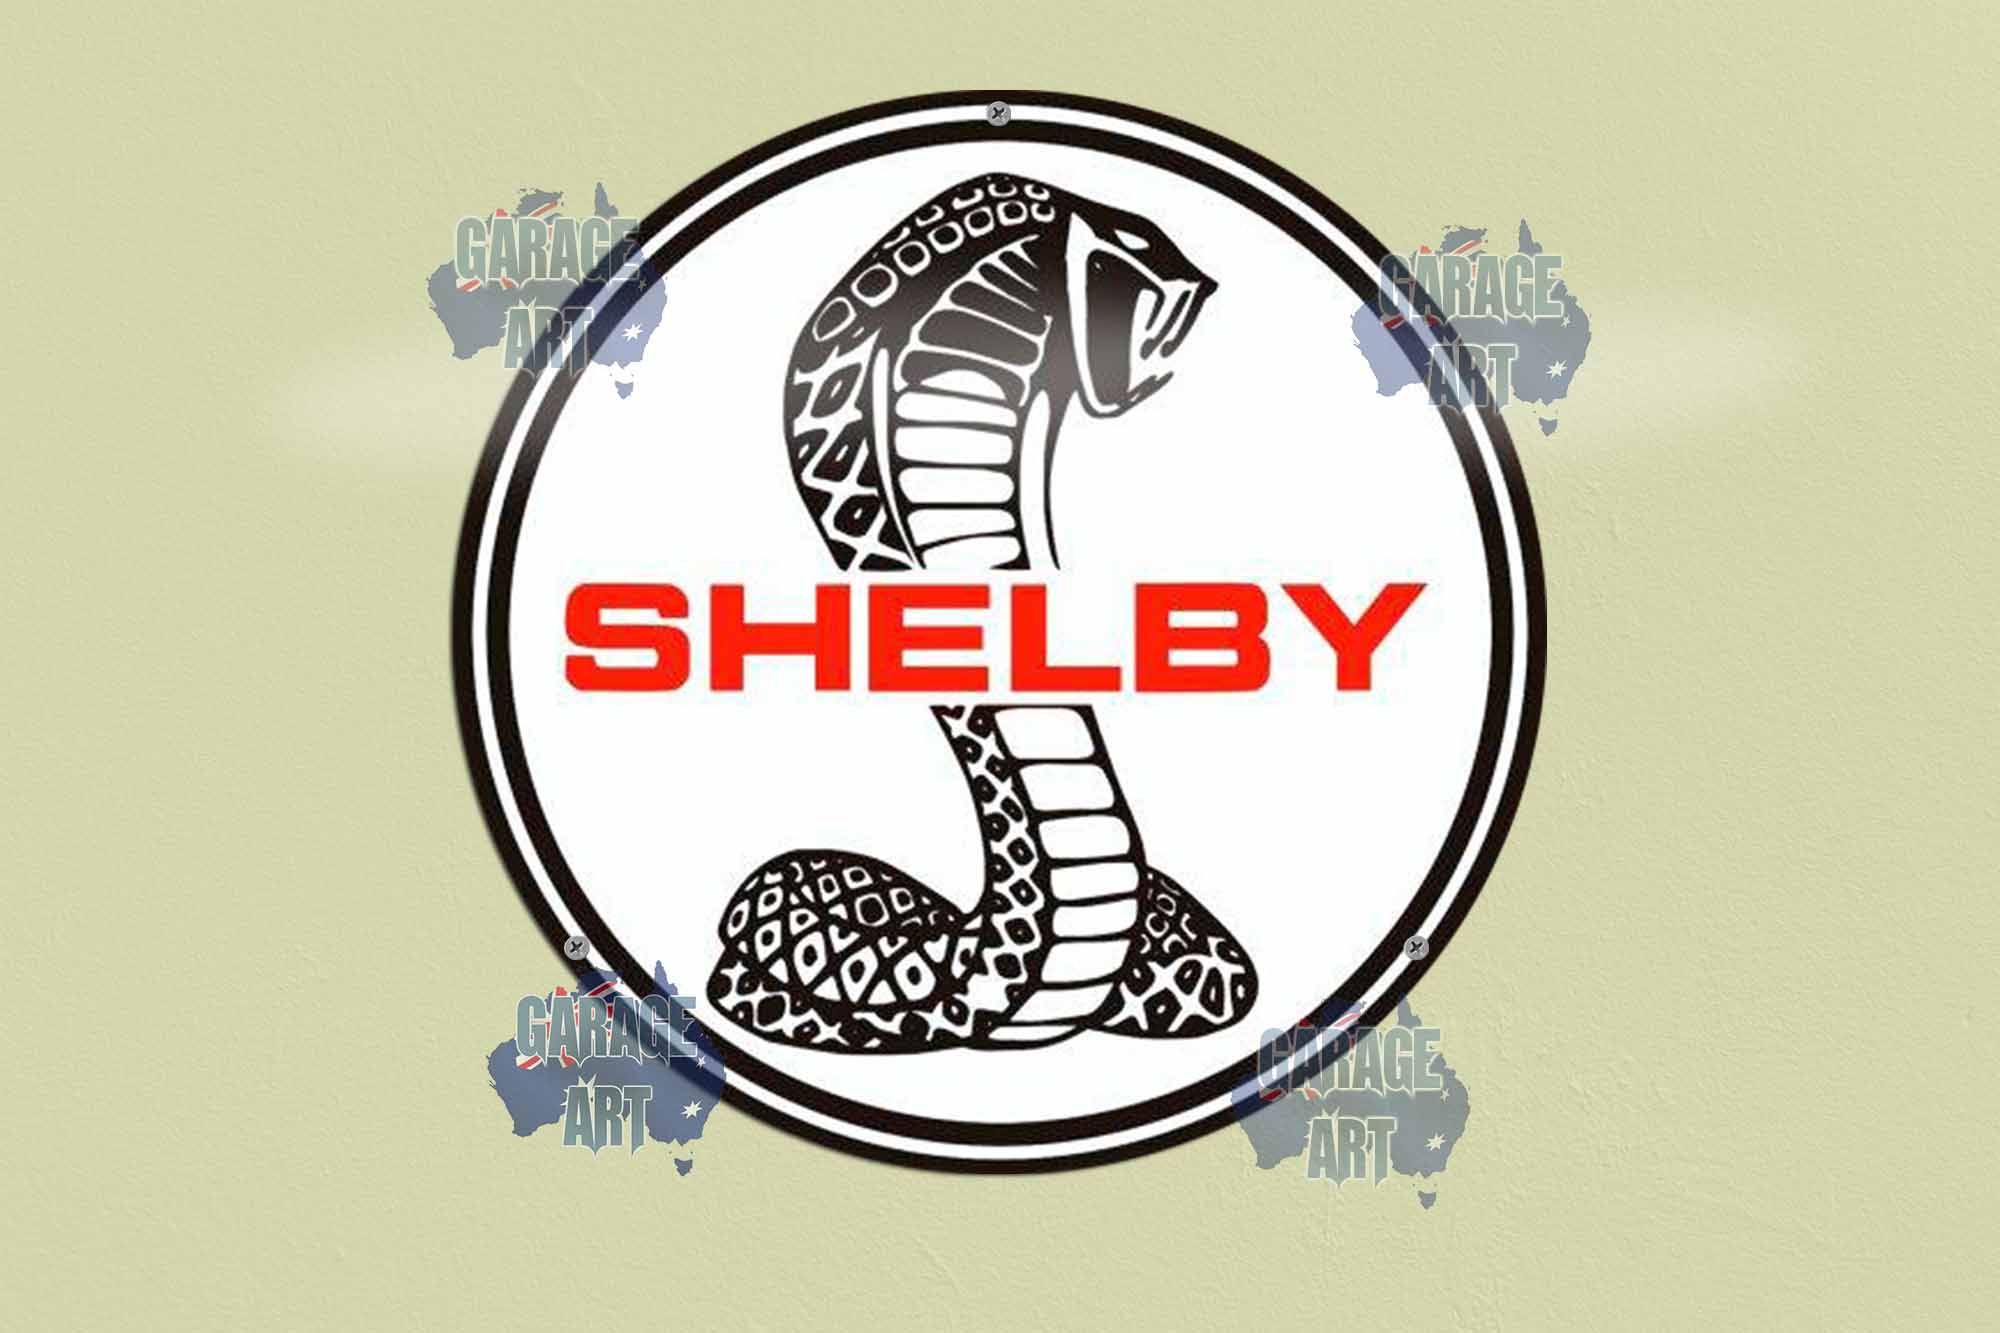 Shelby Black Snake 5355mmDIa Tin Sign freeshipping - garageartaustralia